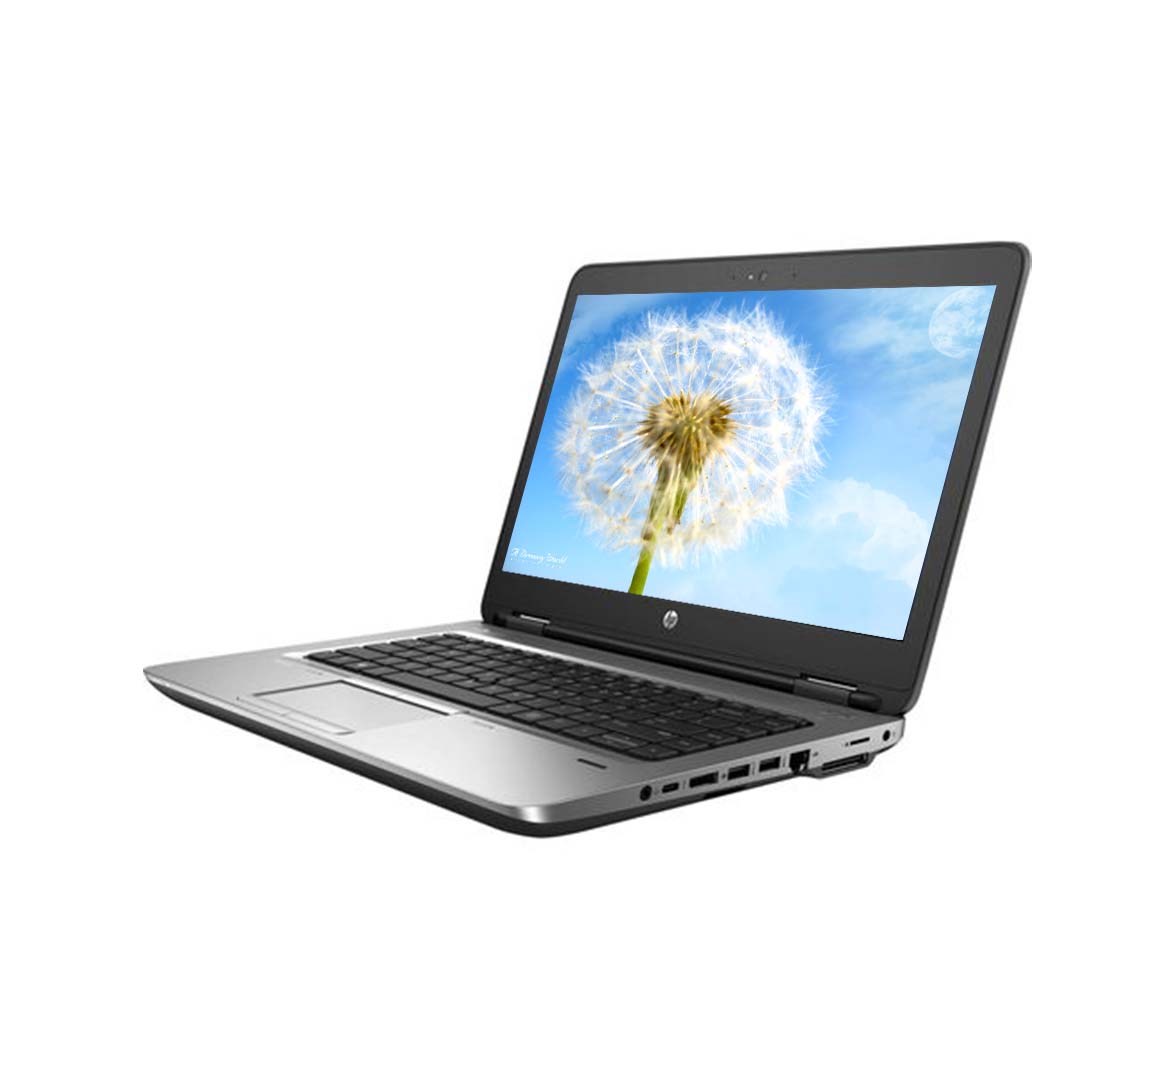 HP ProBook 645 G2 Business Laptop, AMD A10 CPU, 8GB RAM, 256GB SSD, AMD RADEON R6, 14 inch Display, Windows 10 Pro, Refurbished Laptop